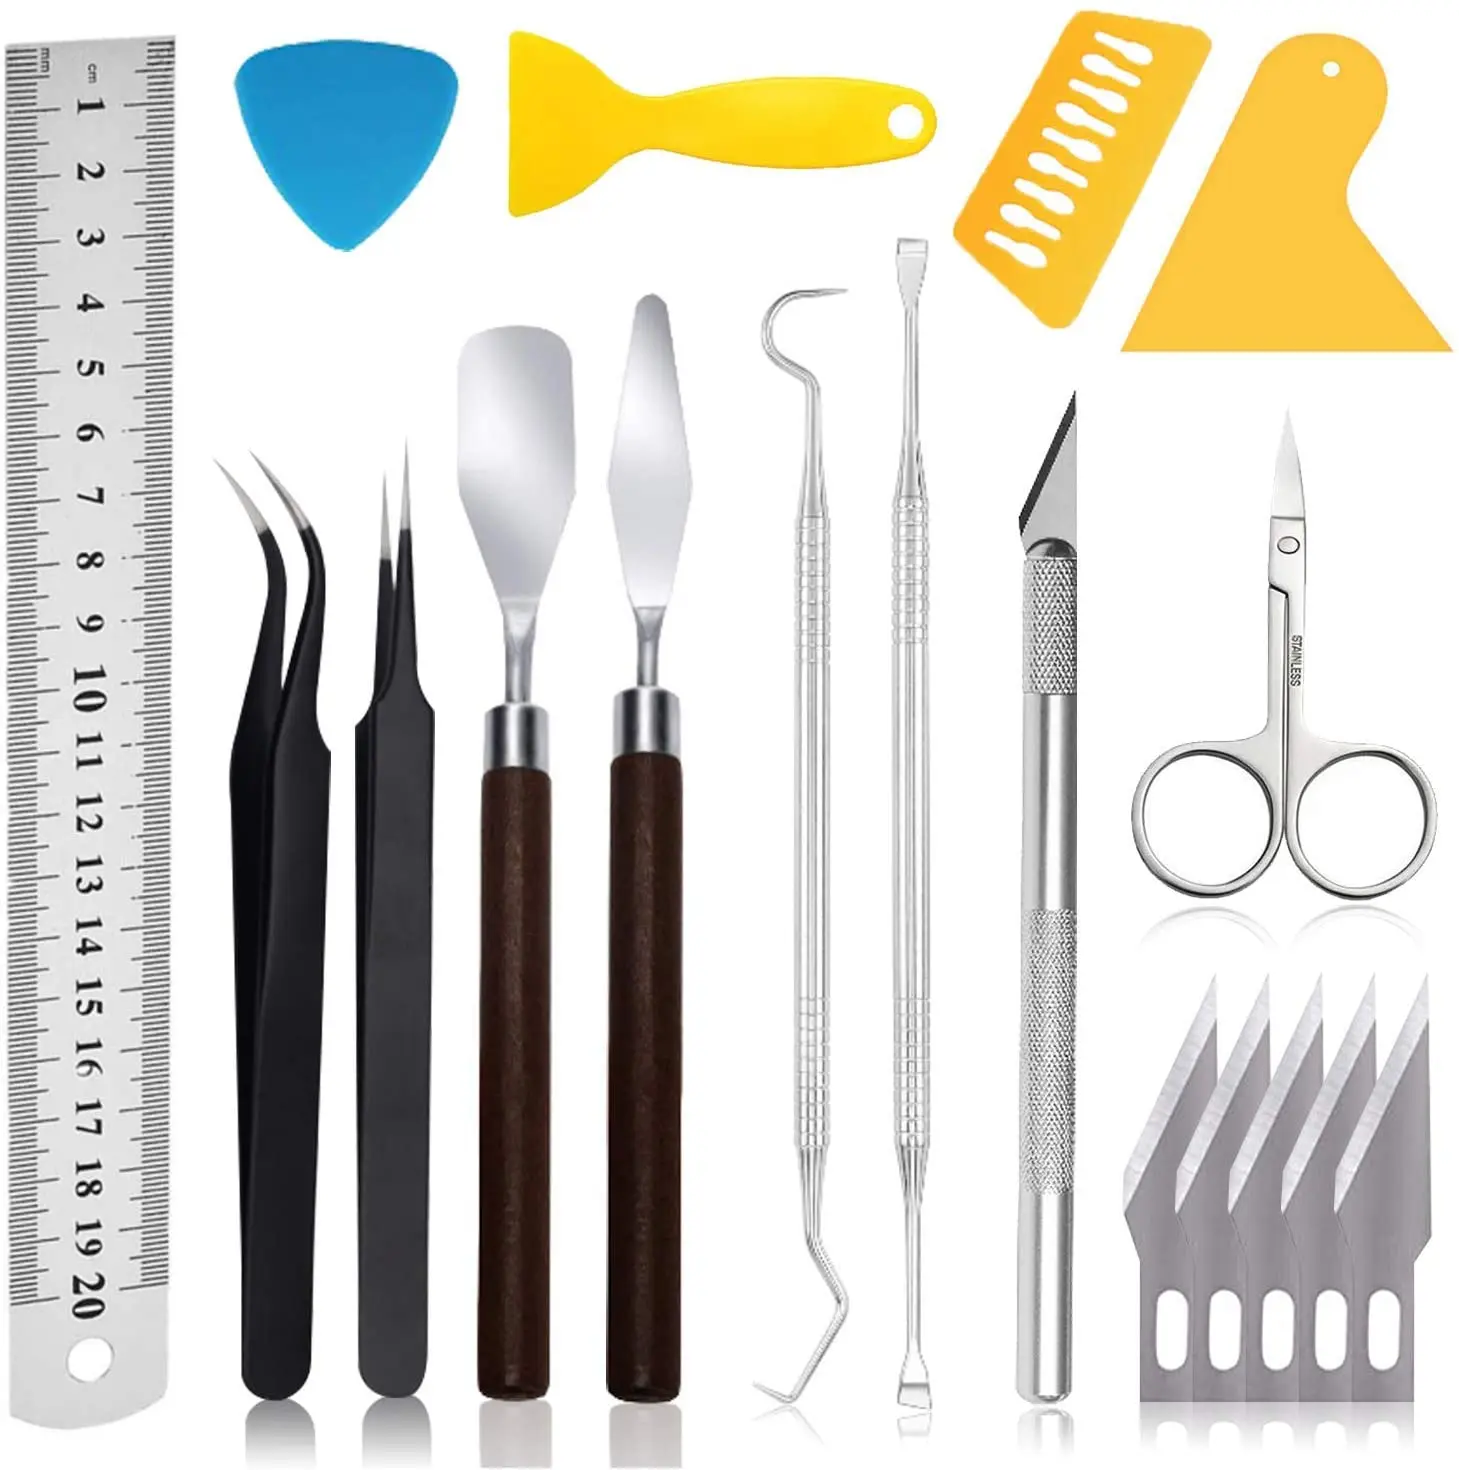 Weeding Tools Stainless Steel for Vinyl: 18 PCS Craft Basic Set Tools Kits Including Scissor, Tweezers, Weeders, Scraper